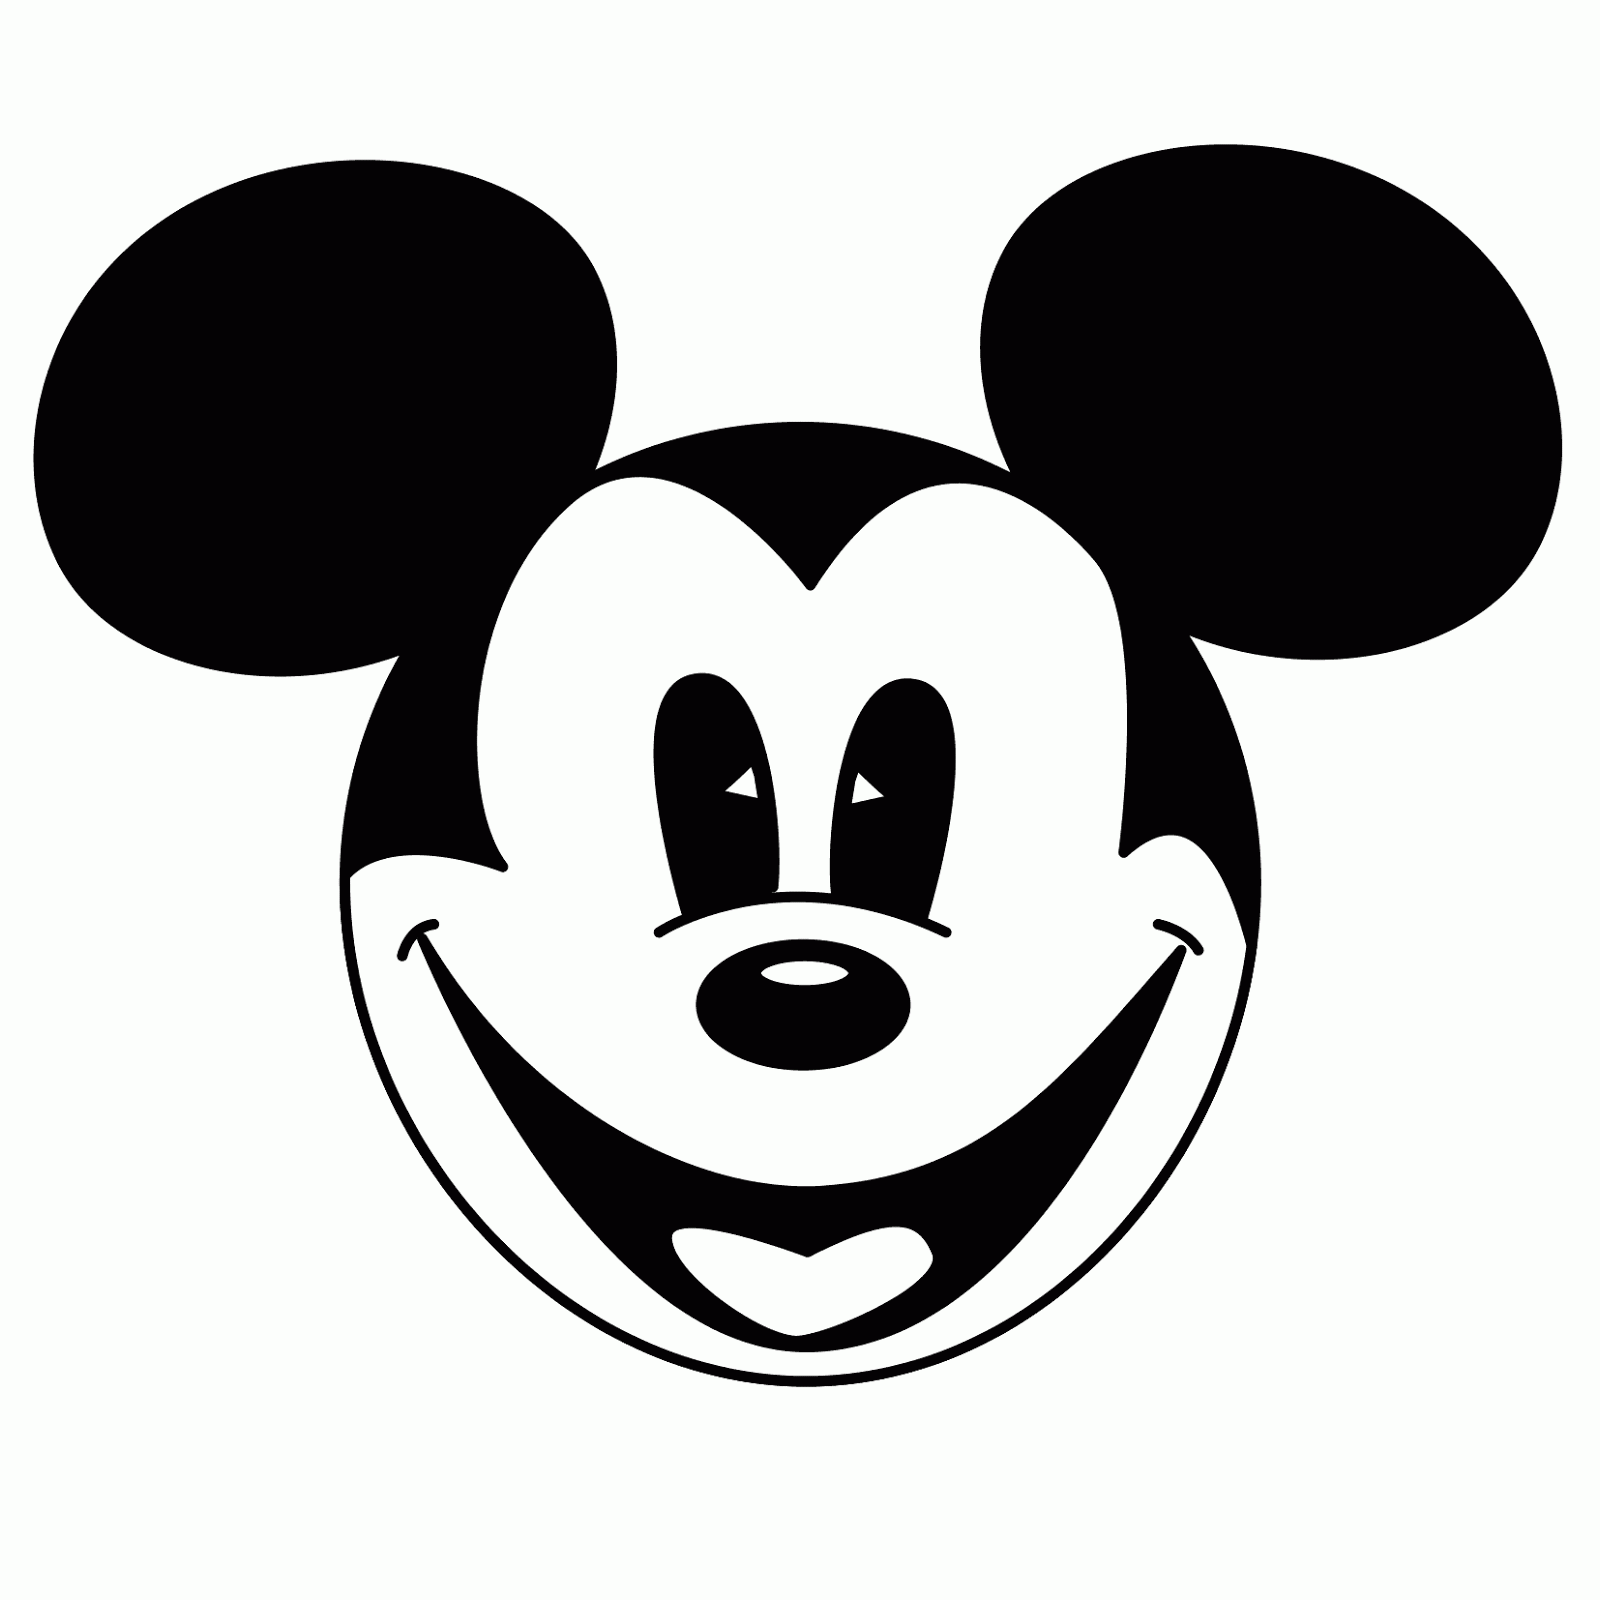 Mickey Head Template Cliparts.co